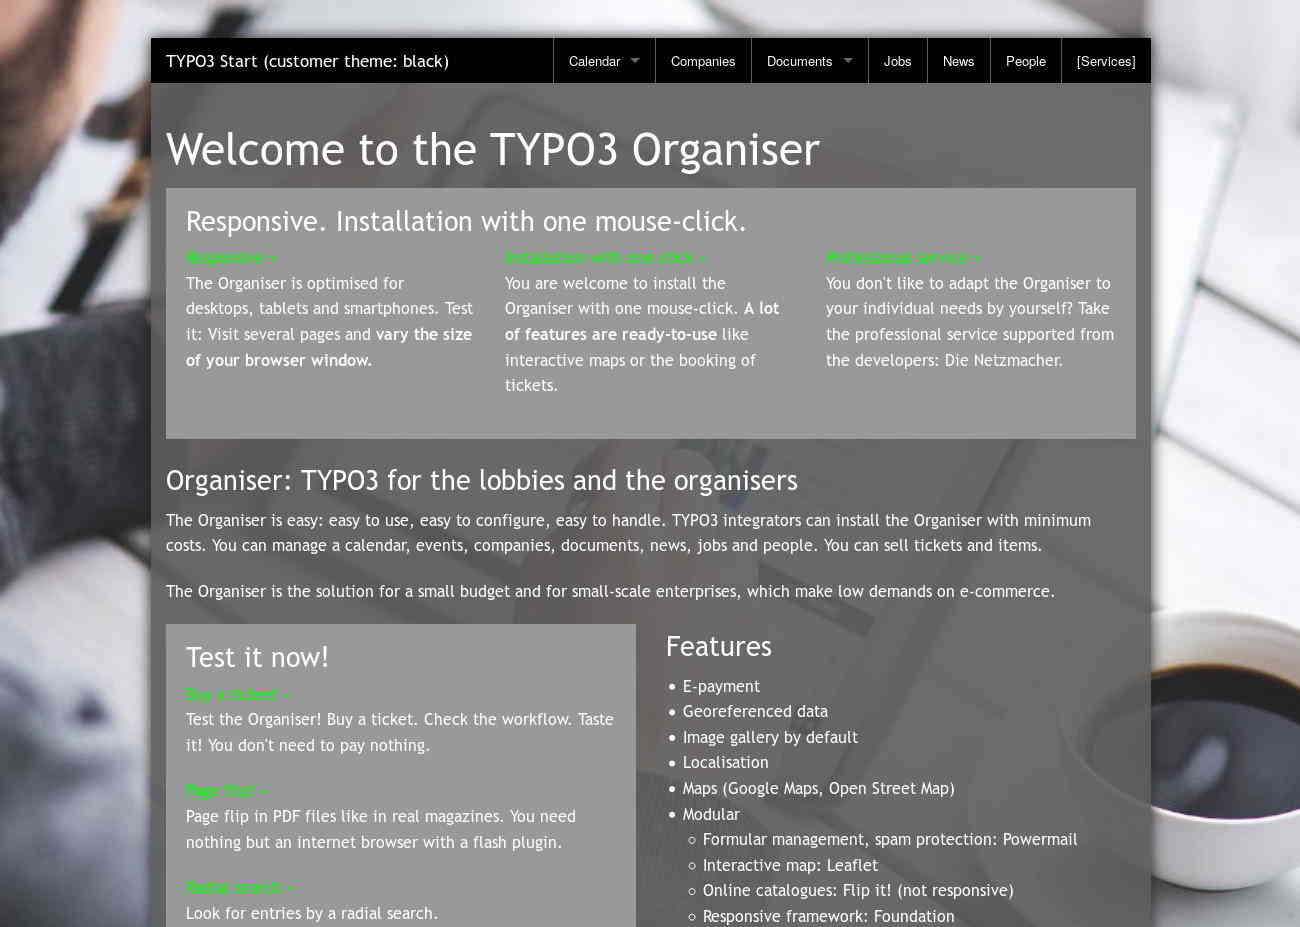 The black theme of Start TYPO3 Responsive +Customer